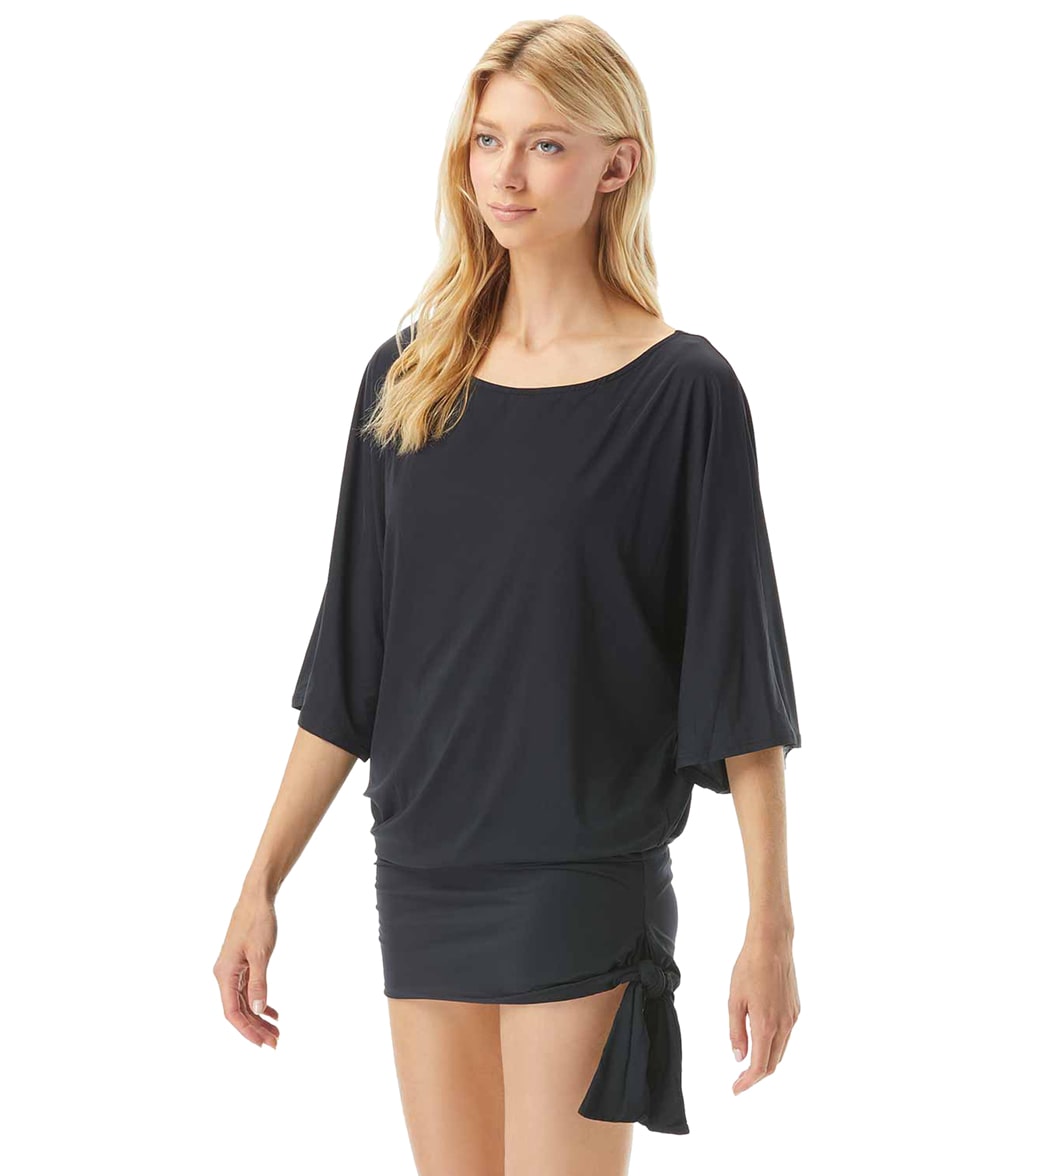 Michael Kors Women's Iconic Solid Side Tie Cover Up Dress - Black Medium - Swimoutlet.com